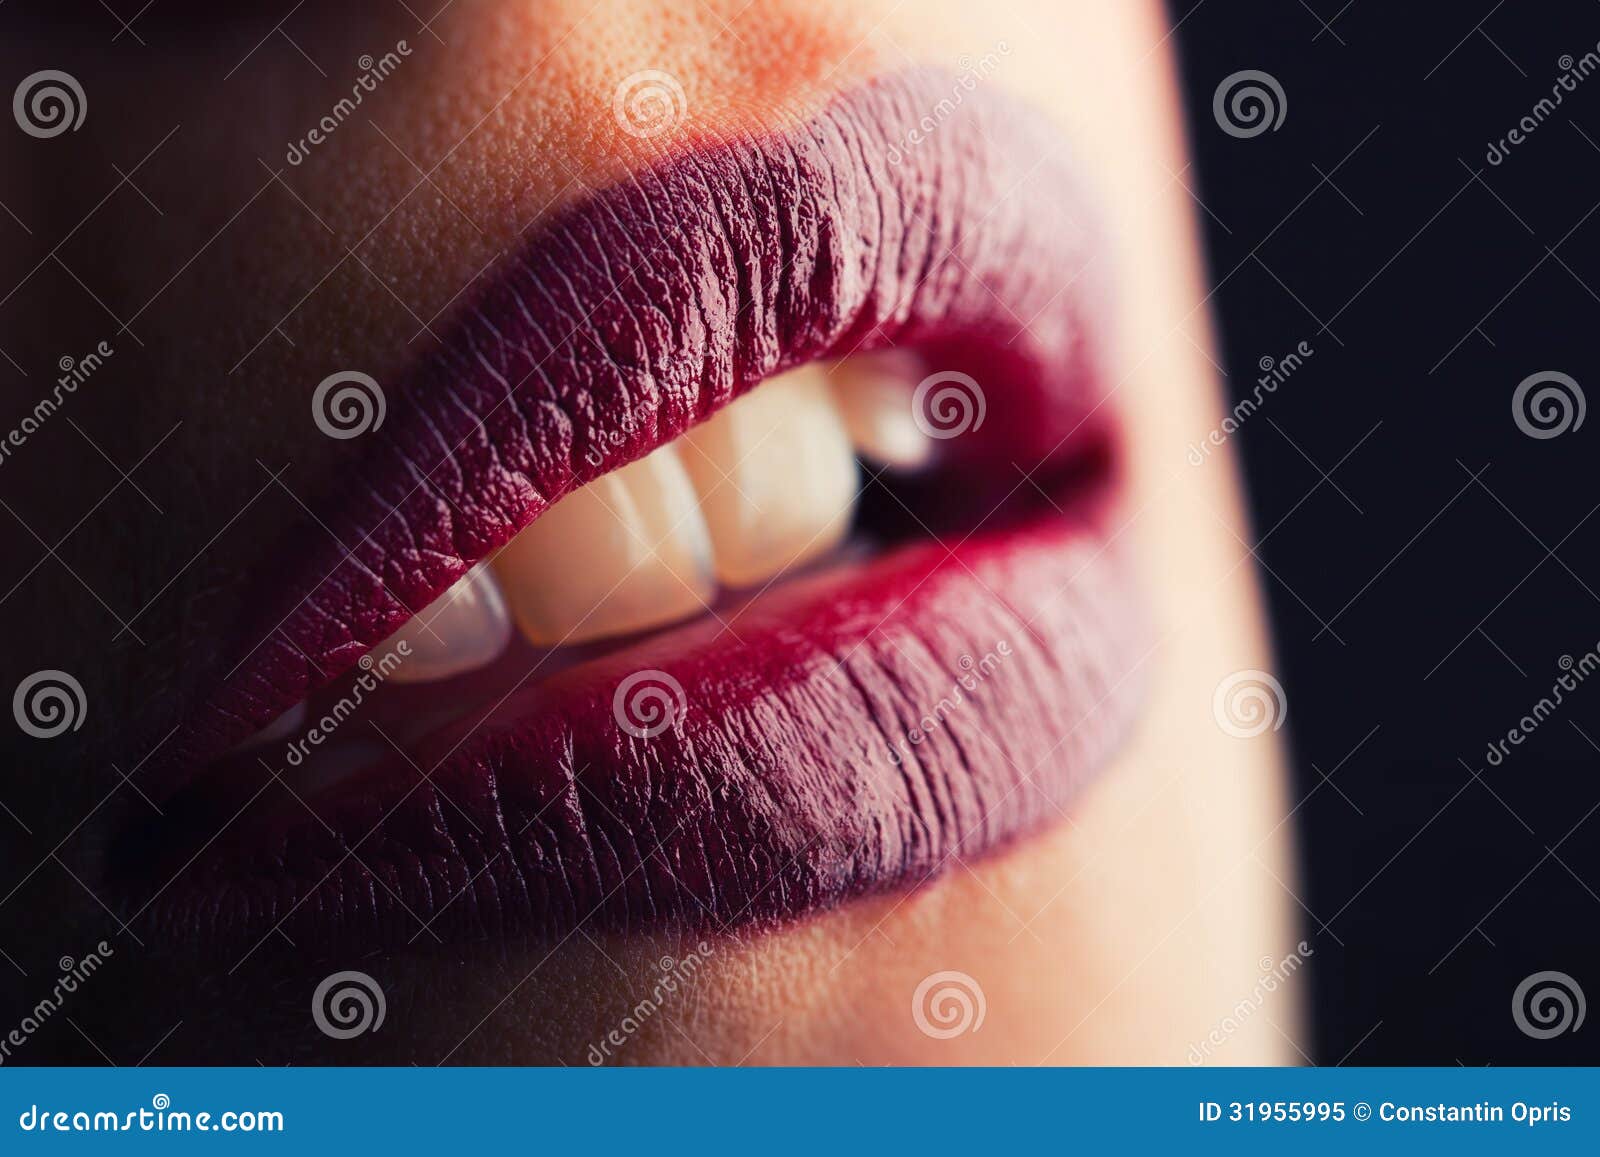 sensual lips